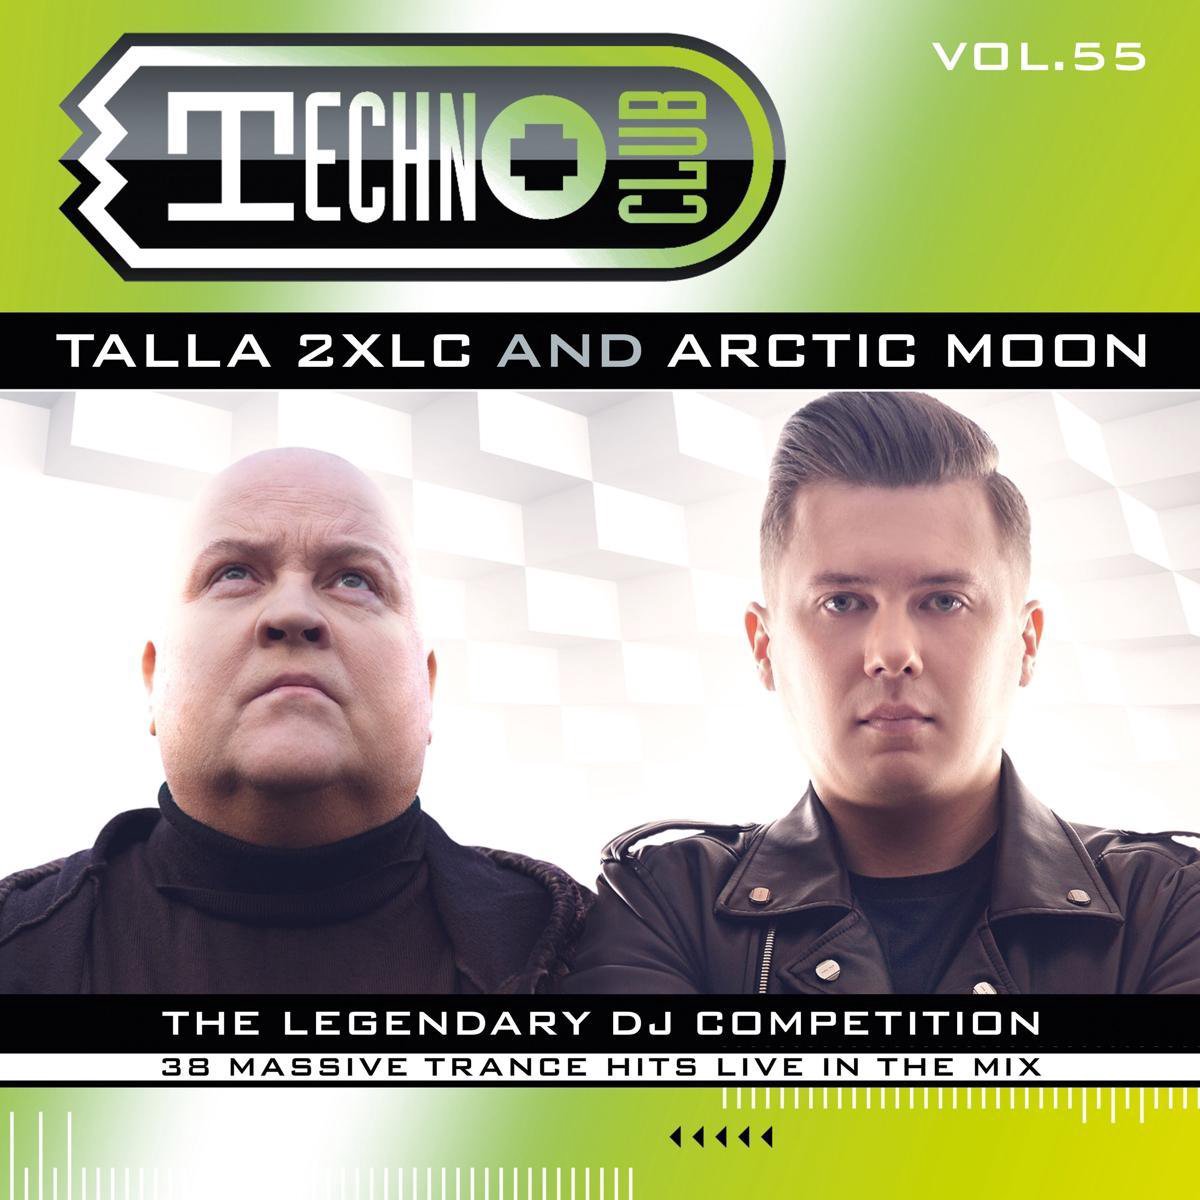 Techno Club Vol.55 - Talla 2Xlc